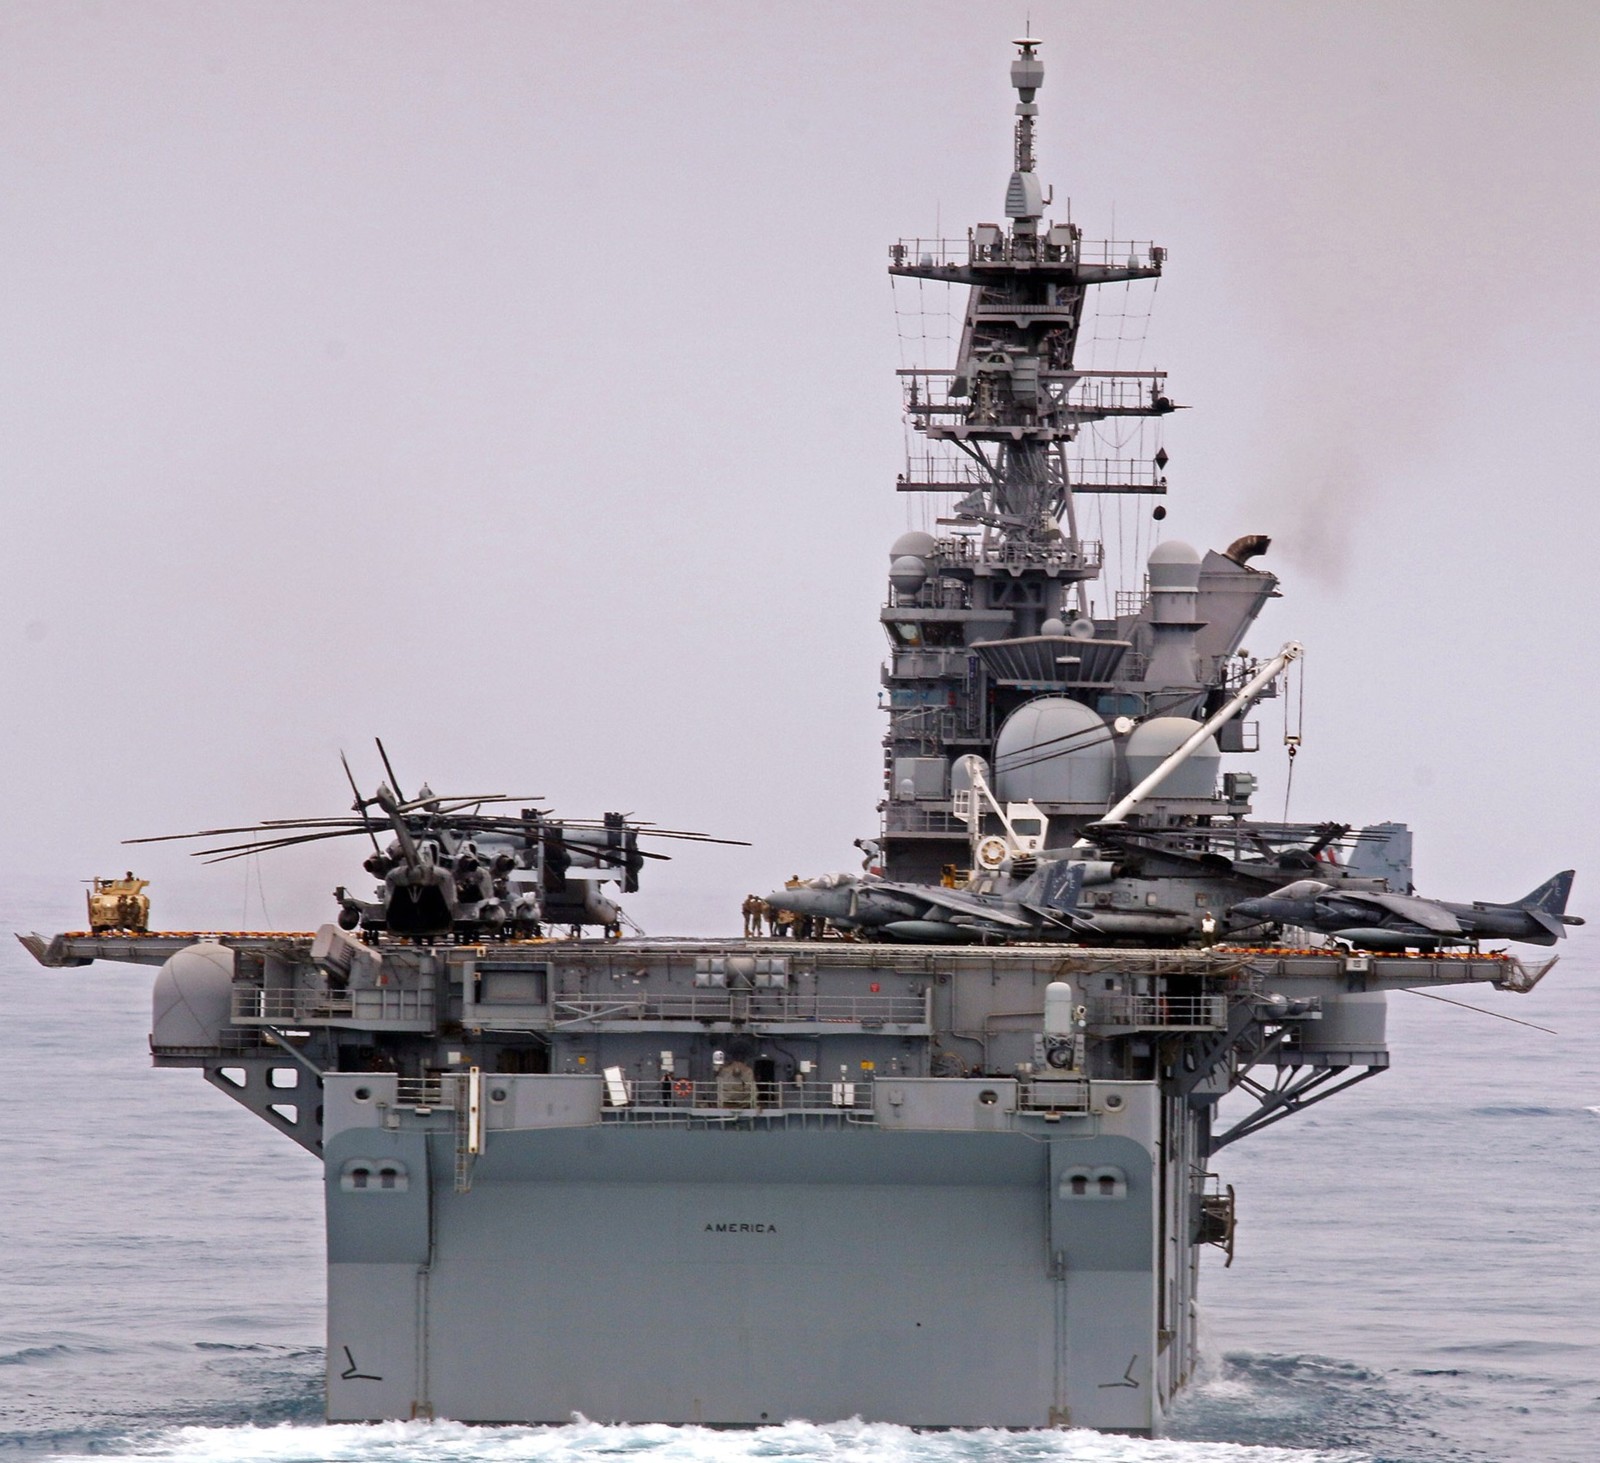 lha-6 uss america amphibious assault ship landing us navy 51